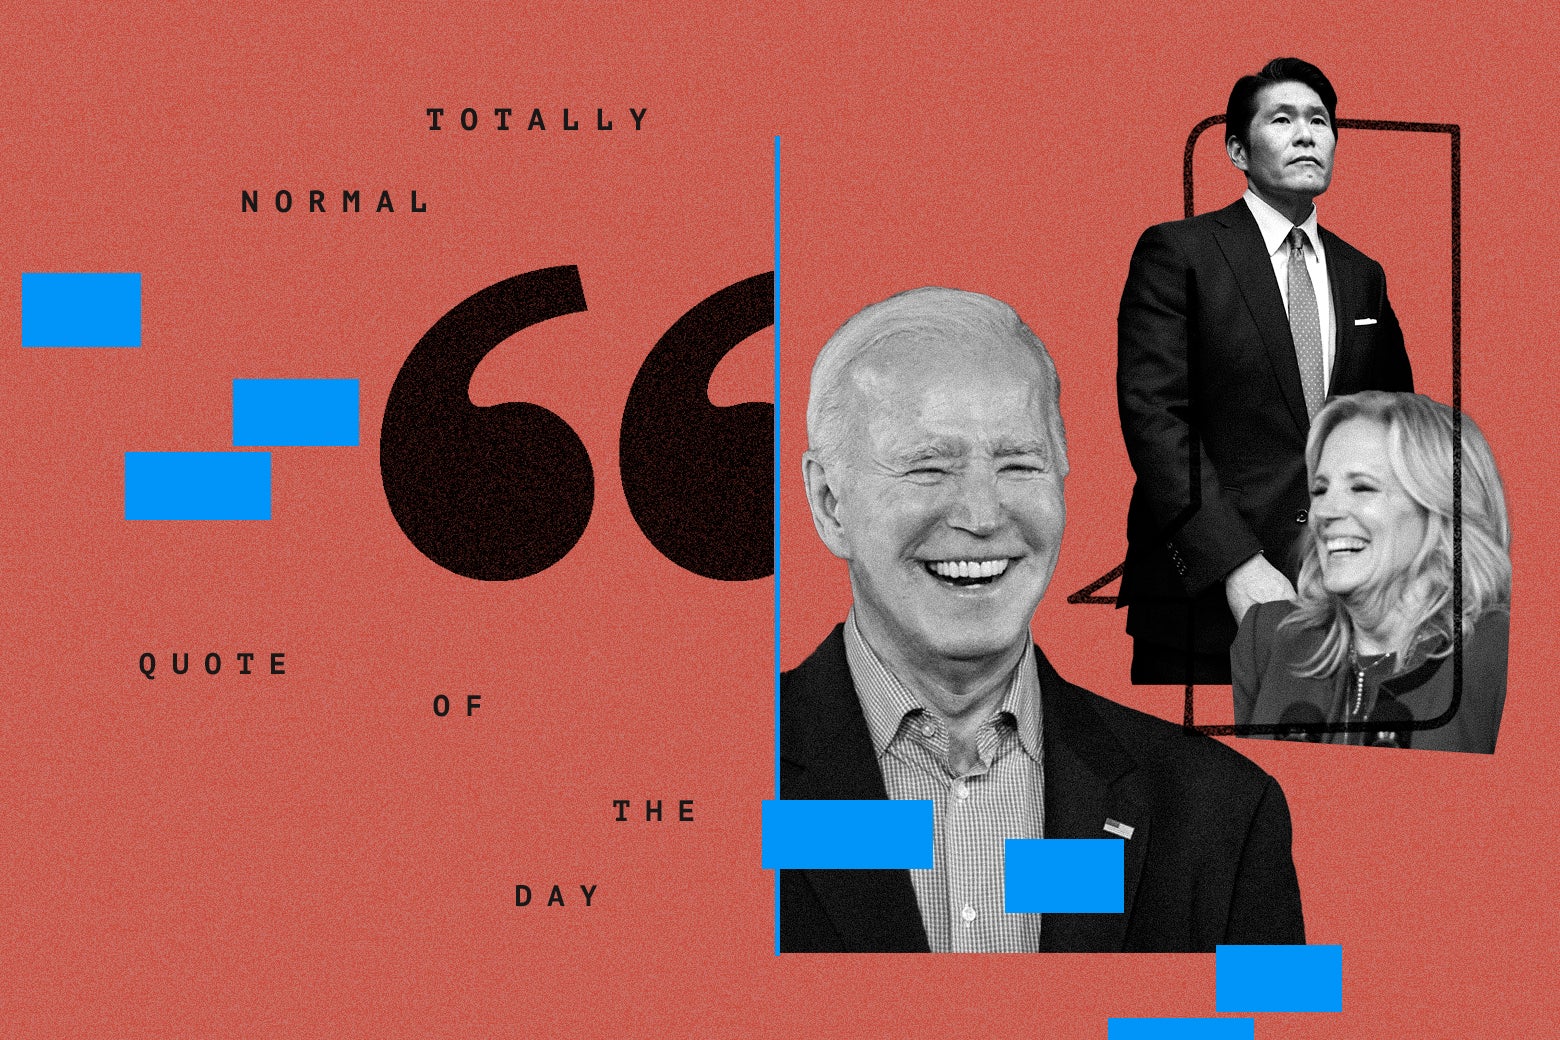 Joe Biden smiling, Robert Hur frowning, and Jill Biden laughing